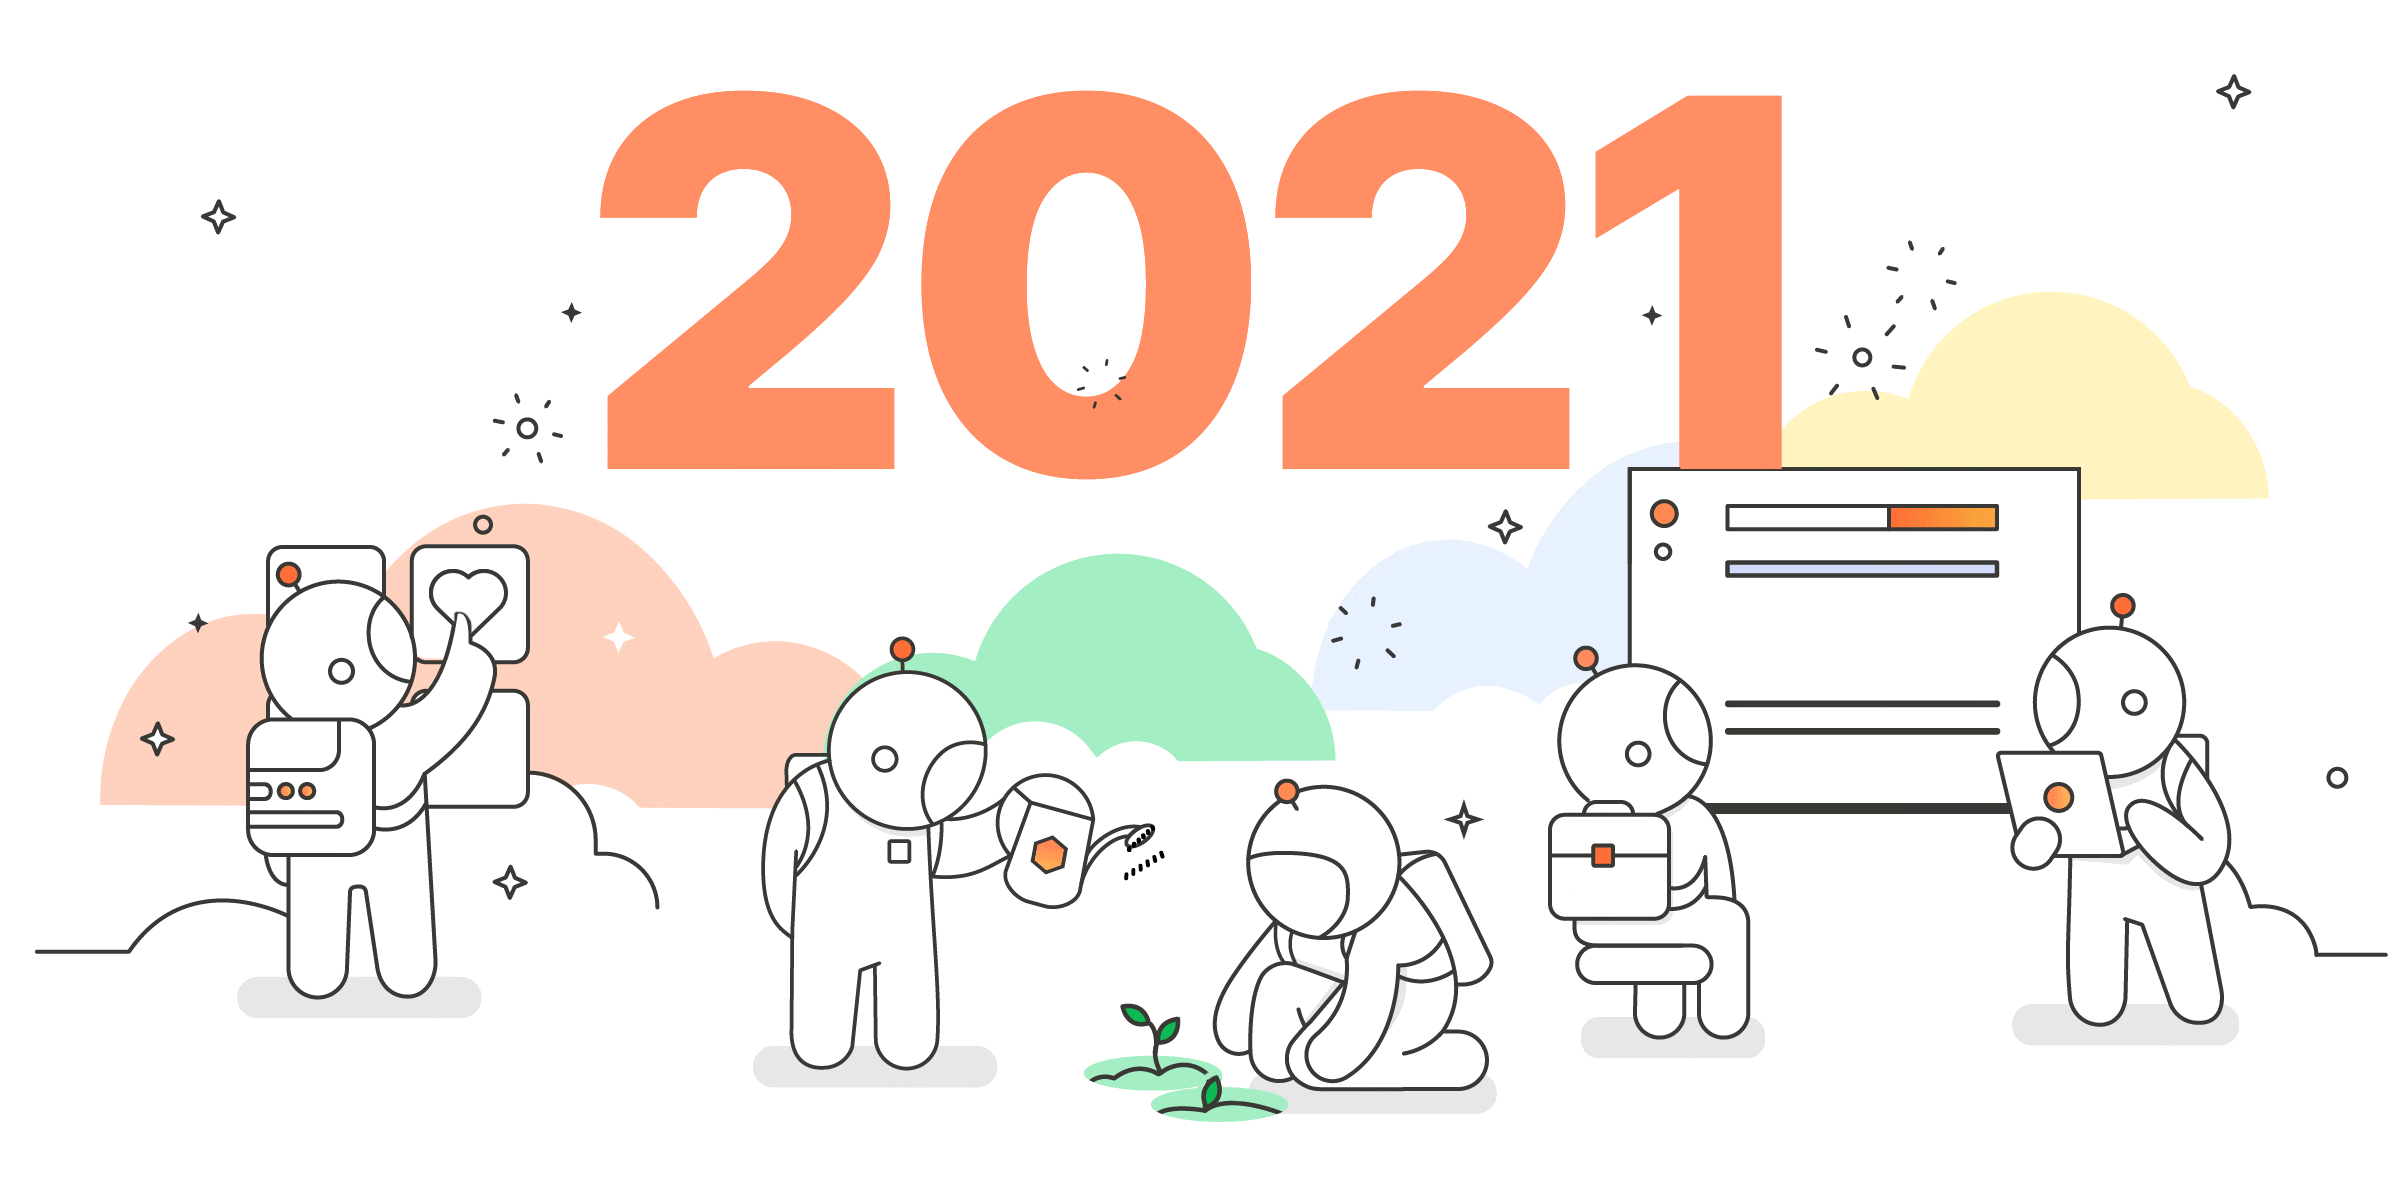 Postmanauts activities during 2021. Illustration.